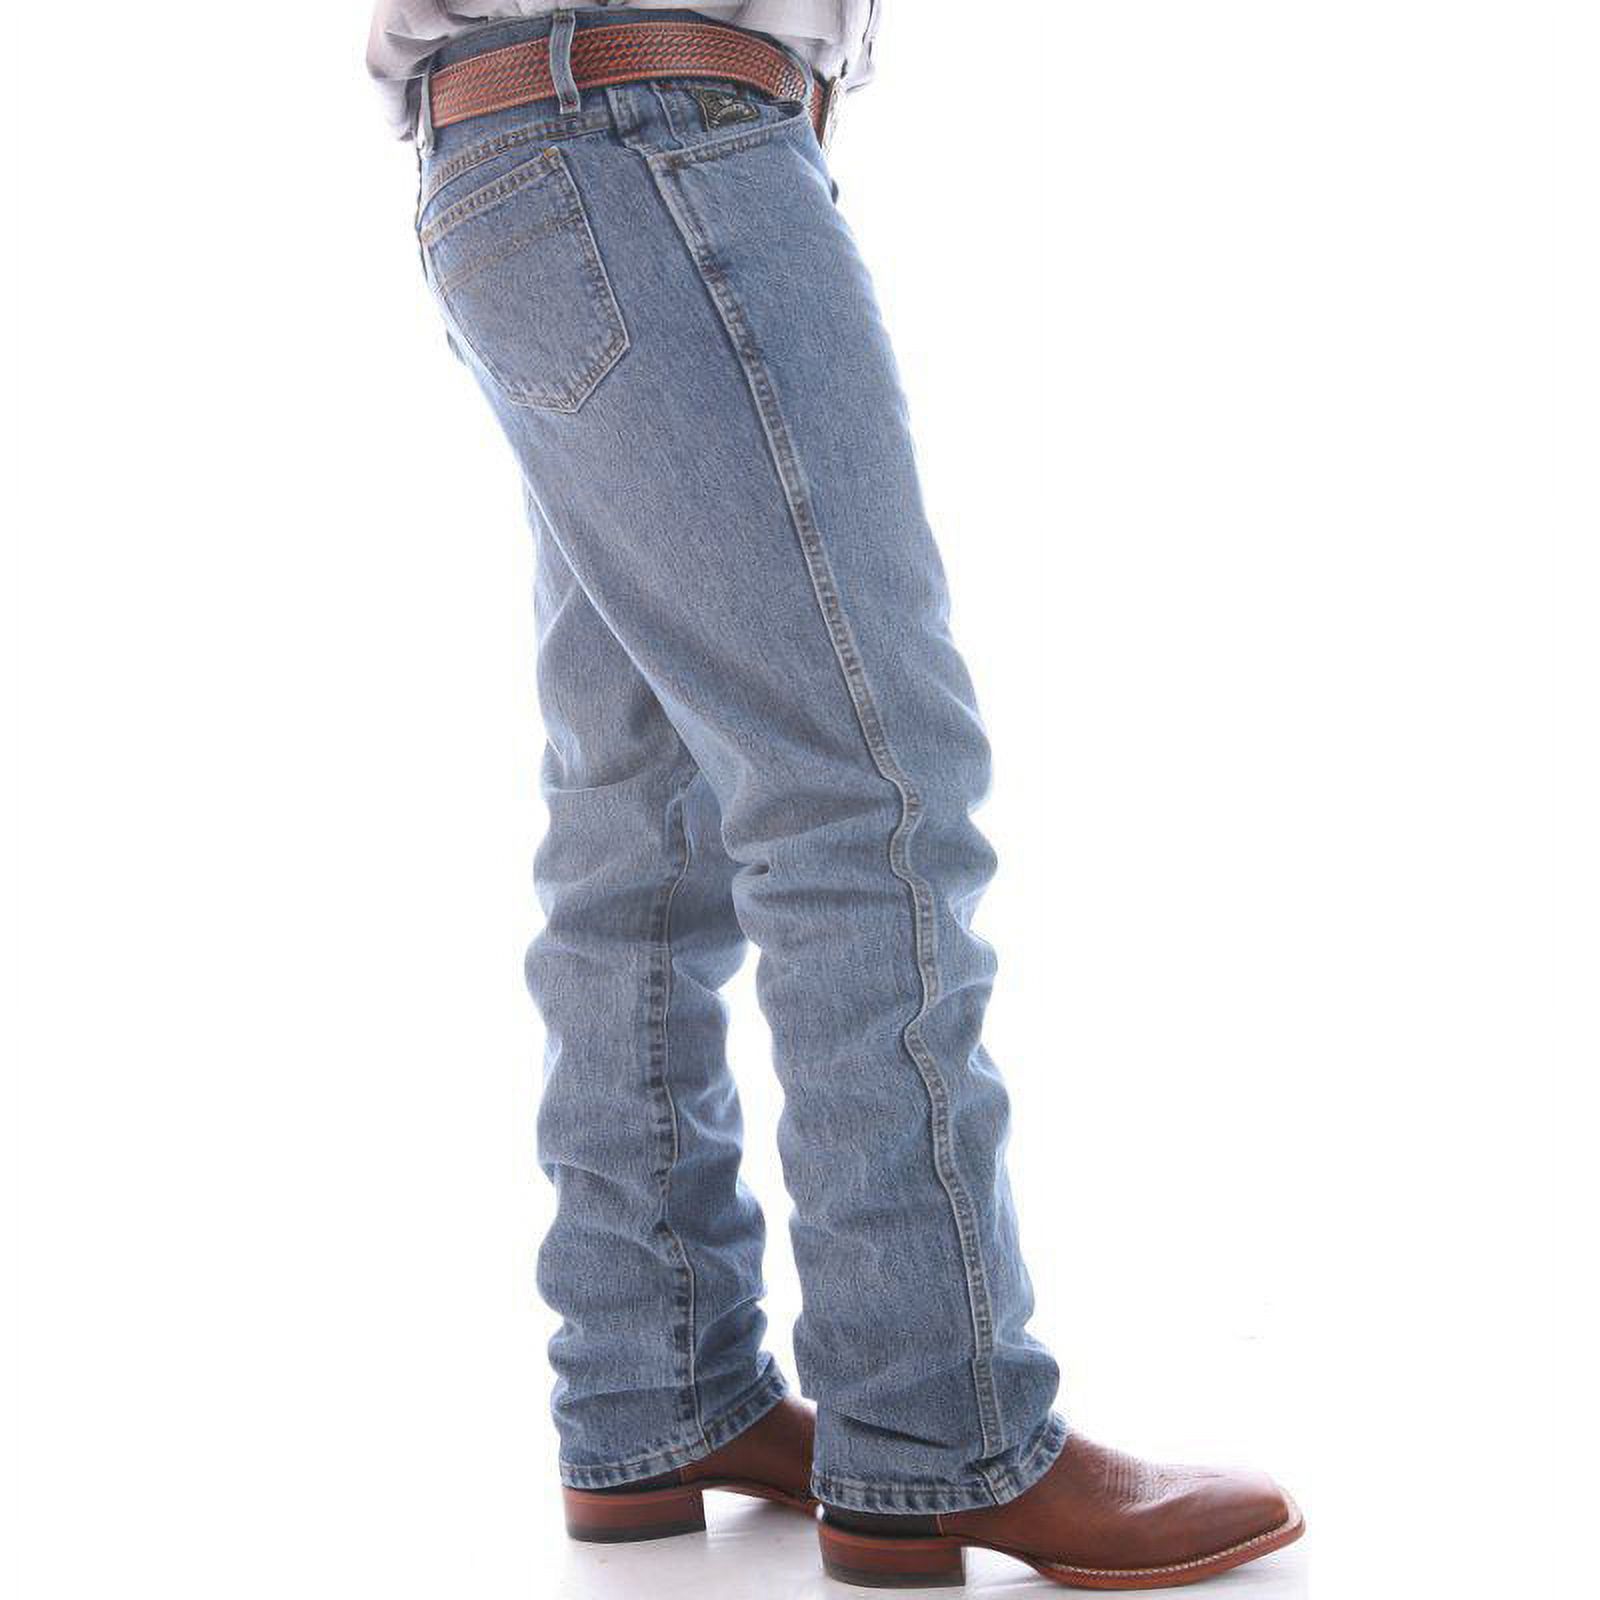 Cinch Men's Jeans  Original Fit Green Label Midstone 33W x 38L  US - image 4 of 4